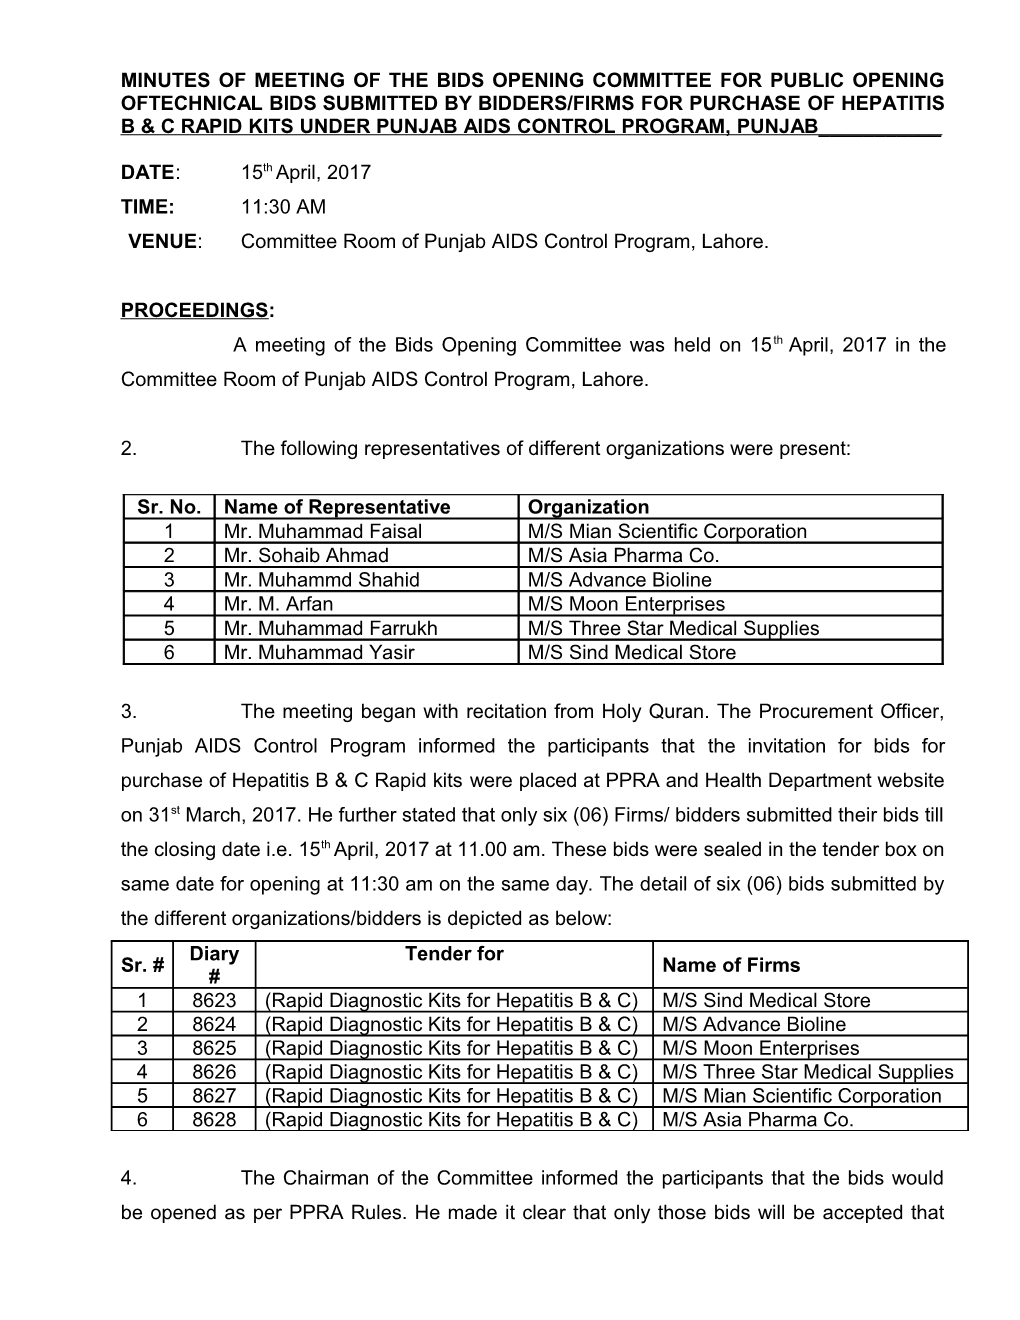 VENUE: Committee Room of Punjab AIDS Control Program, Lahore